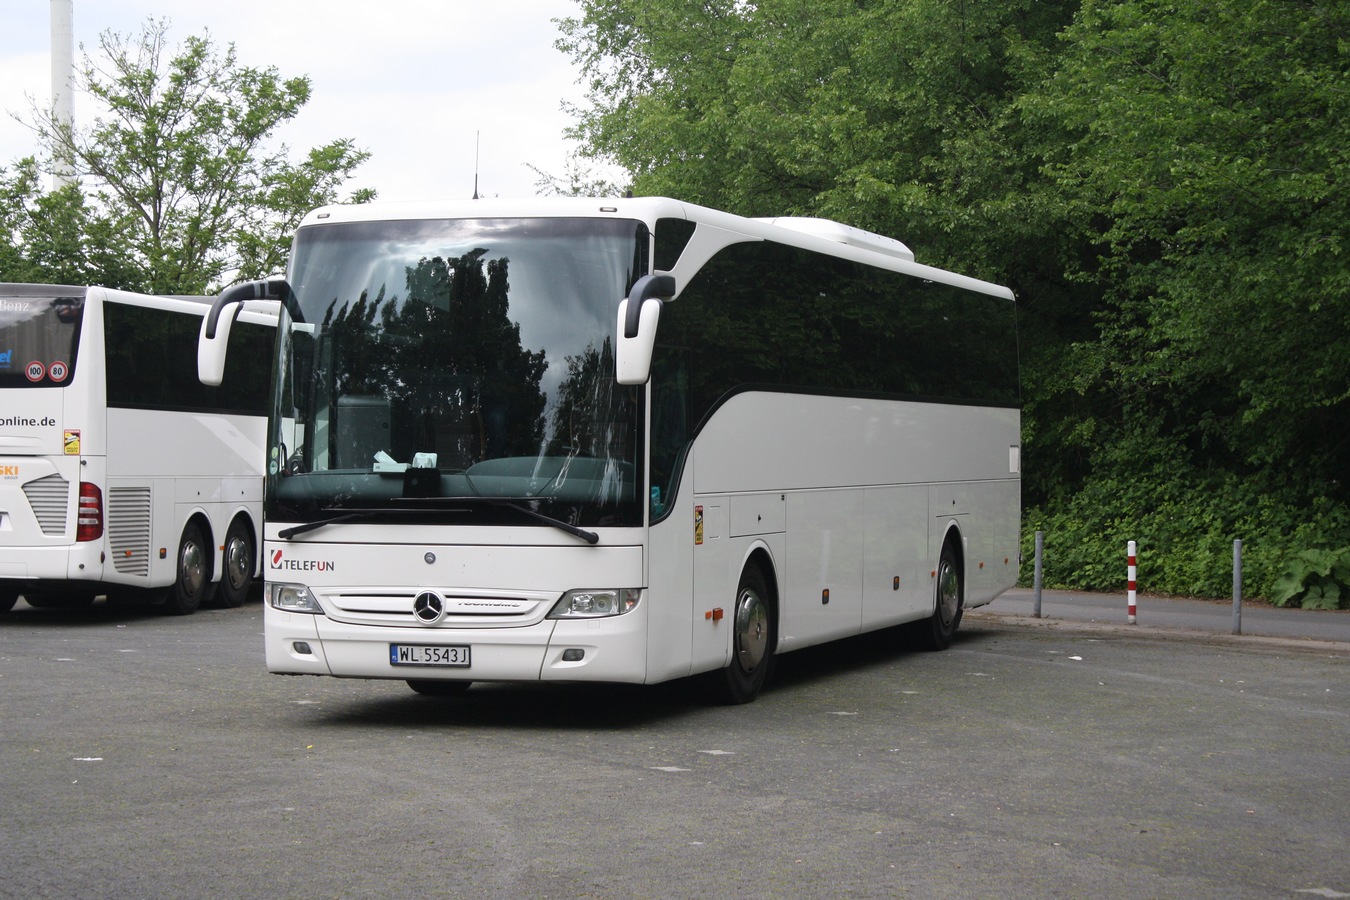 Mercedes-Benz Tourismo 15RHD #WL 5543J